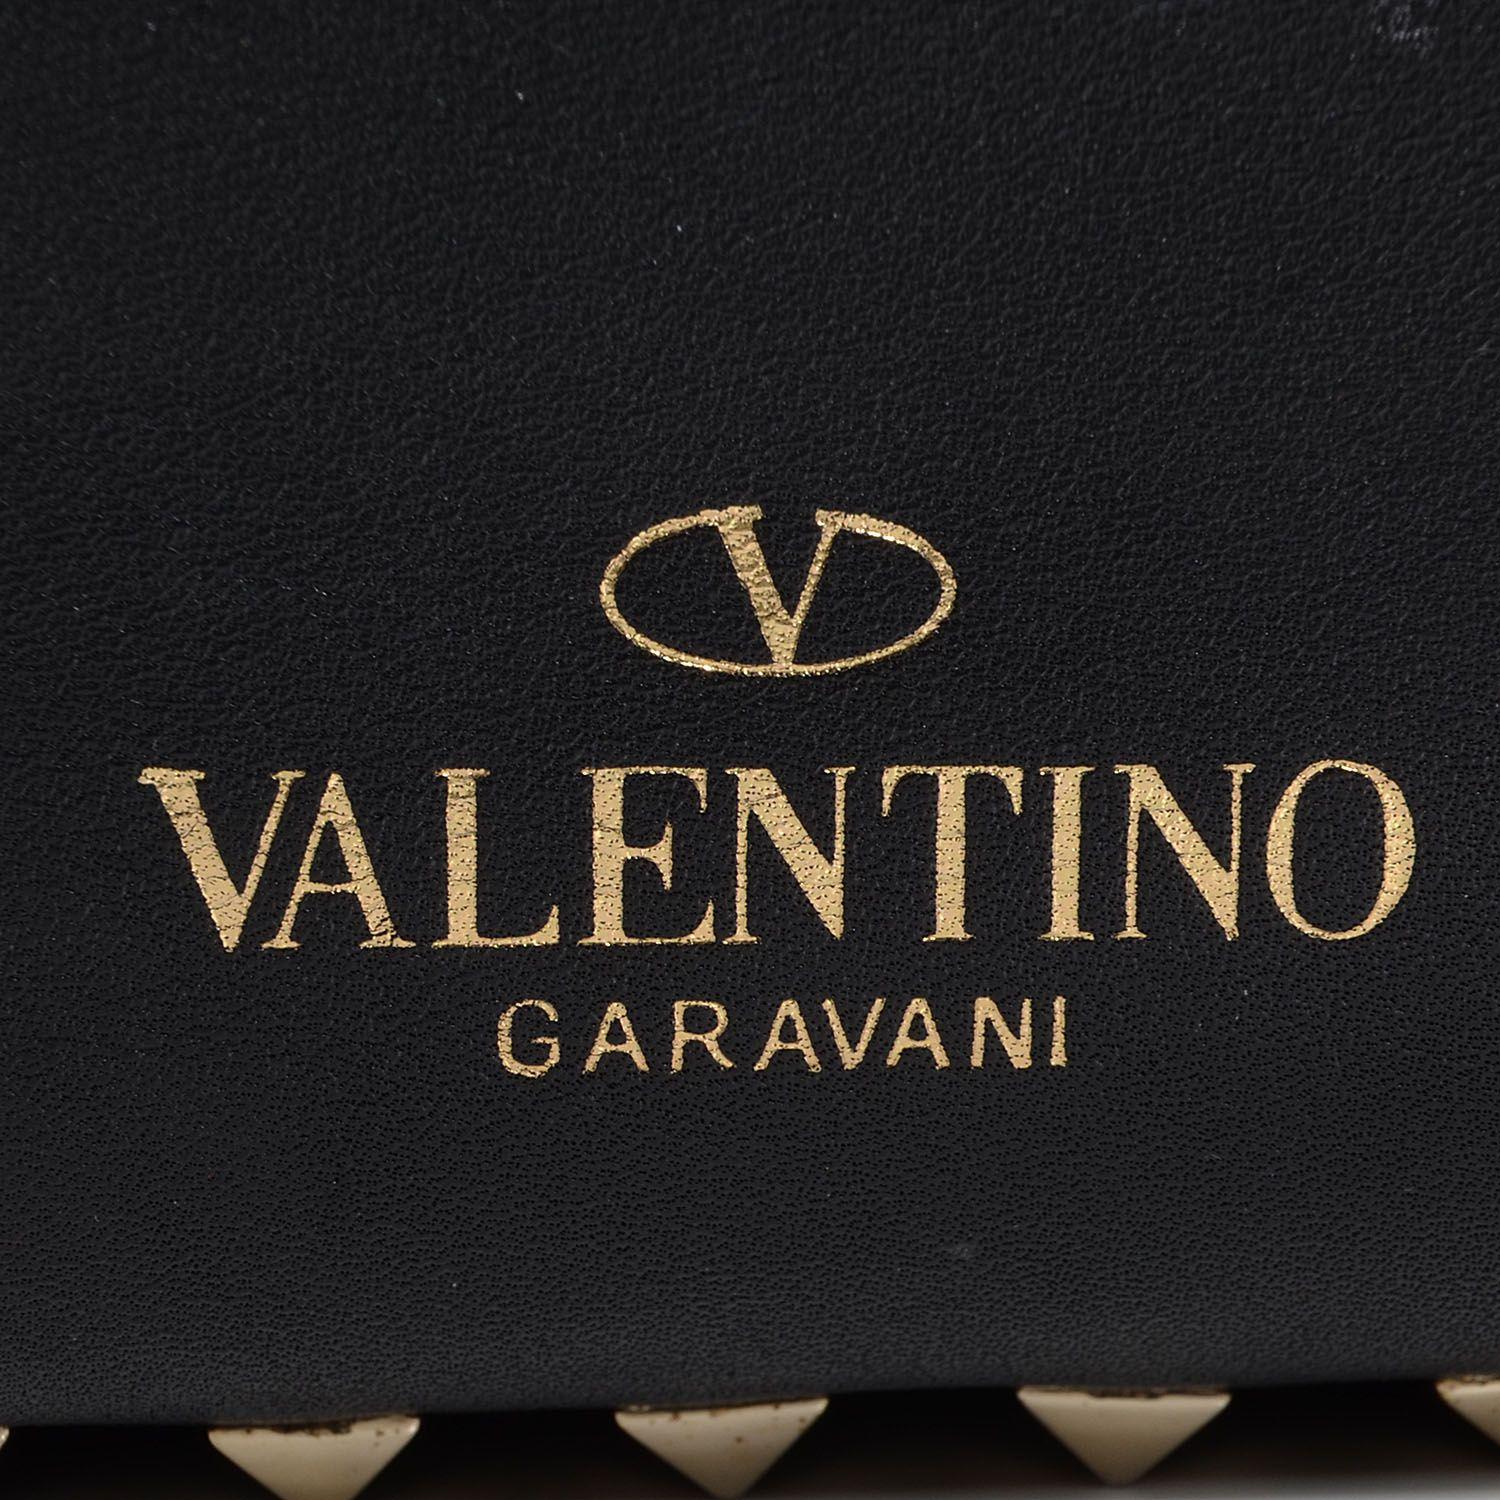 Valentino Garavani Logo - Pictures of Valentino Garavani Logo - kidskunst.info